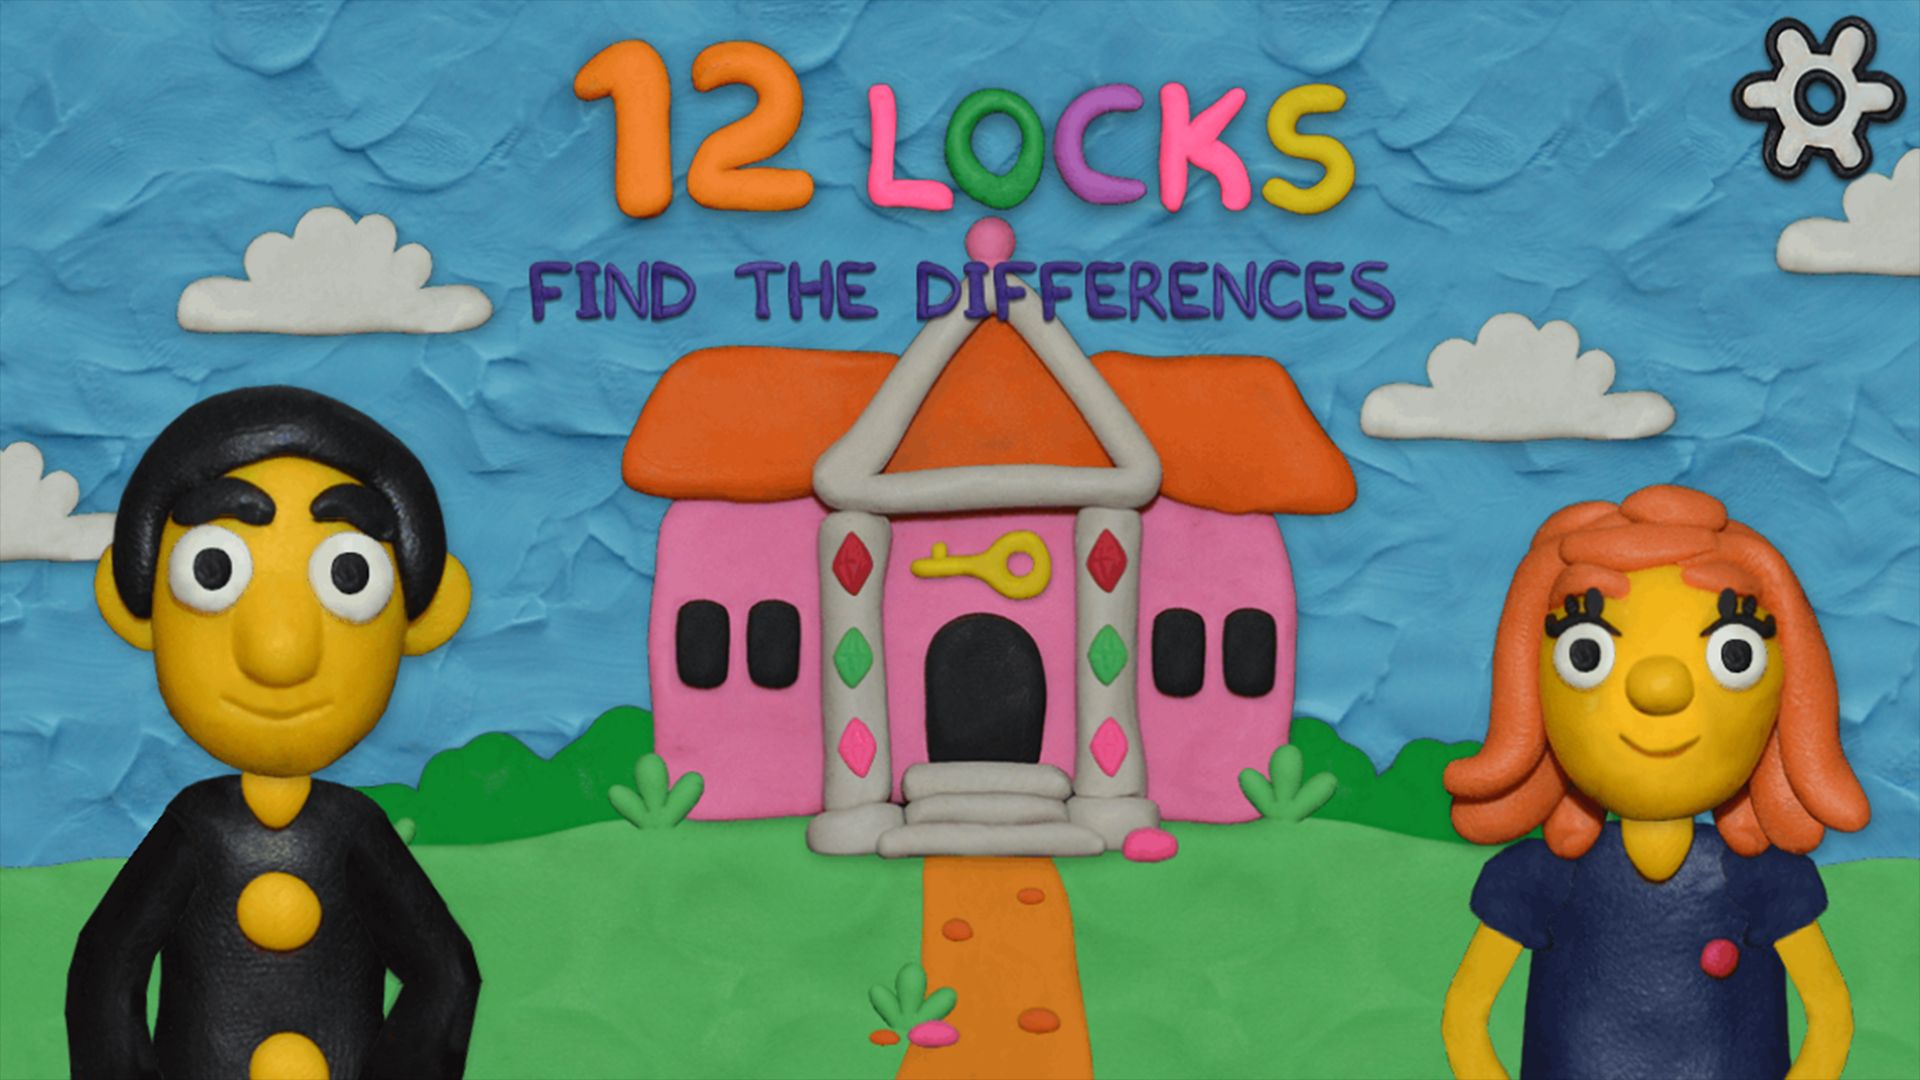 Скачать 12 Locks Find the differences на Андроид A.n.d.r.o.i.d. .5...0. .a.n.d. .m.o.r.e бесплатно.